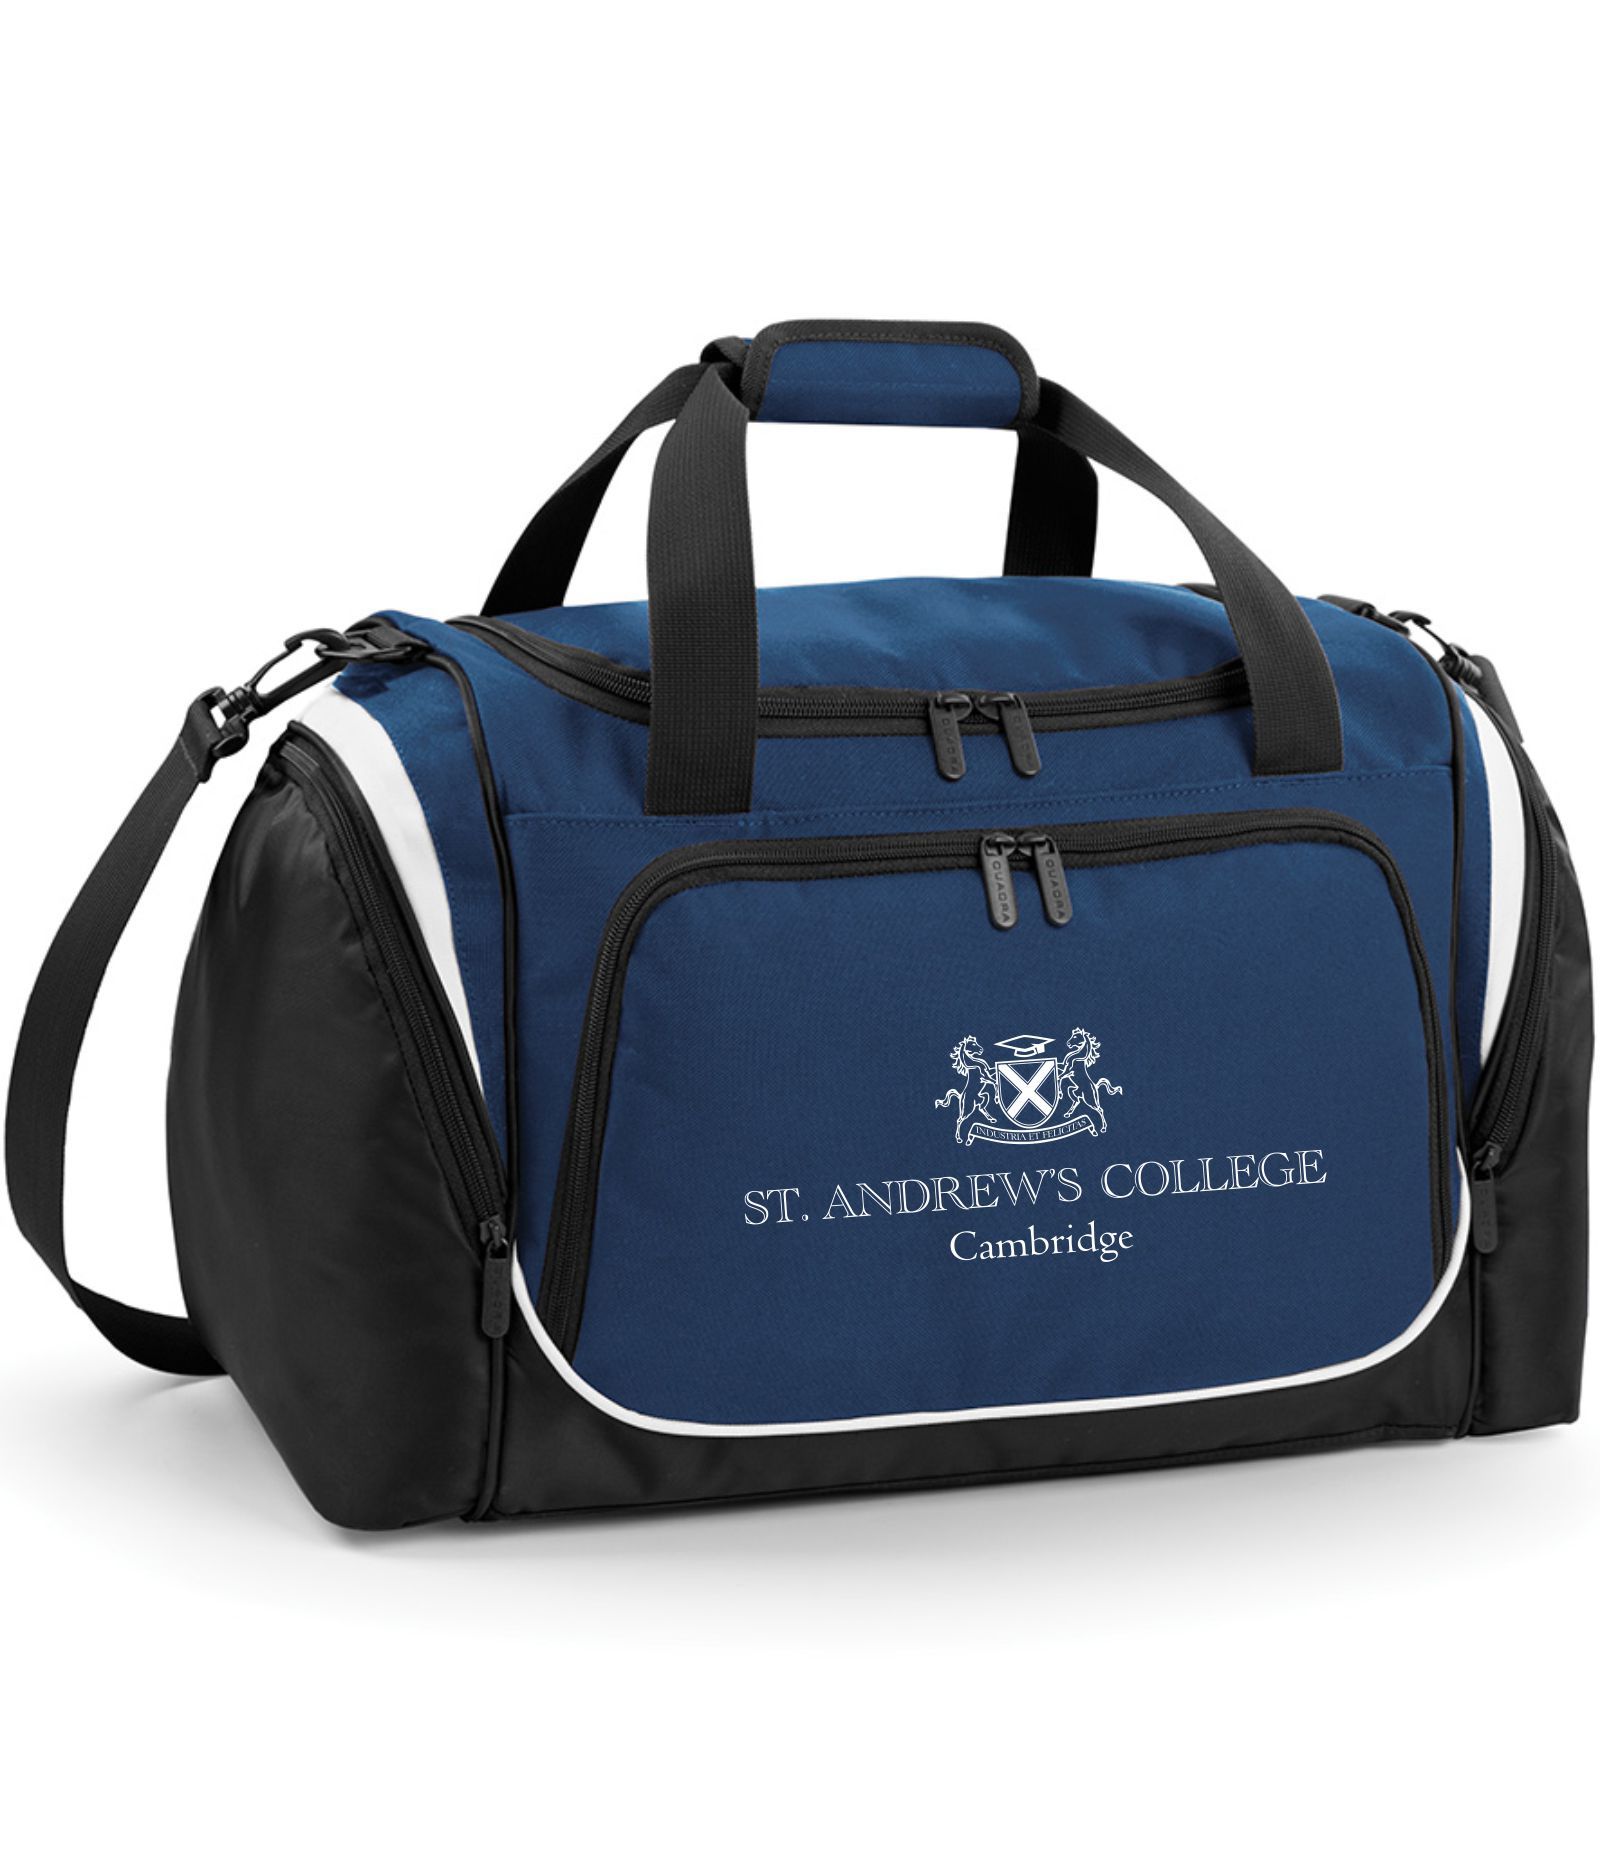 St Andrew's College Cambridge - Locker bag